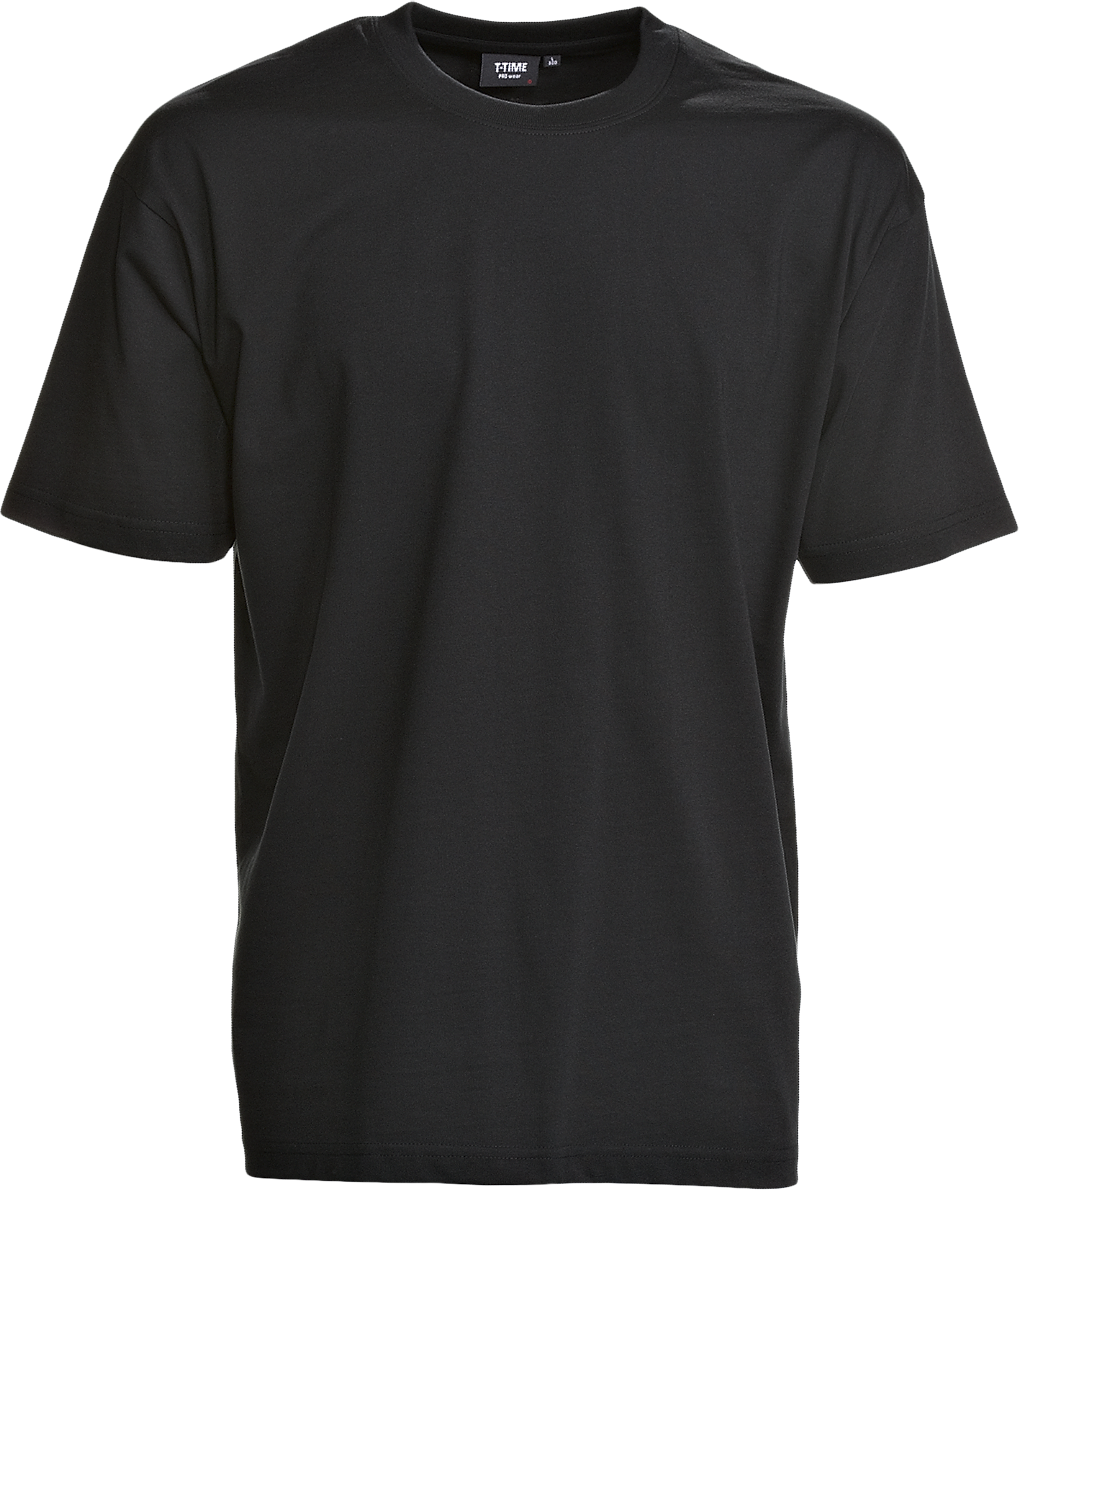 Schwarz Herren T-Shirt, Prowear (8150211) 